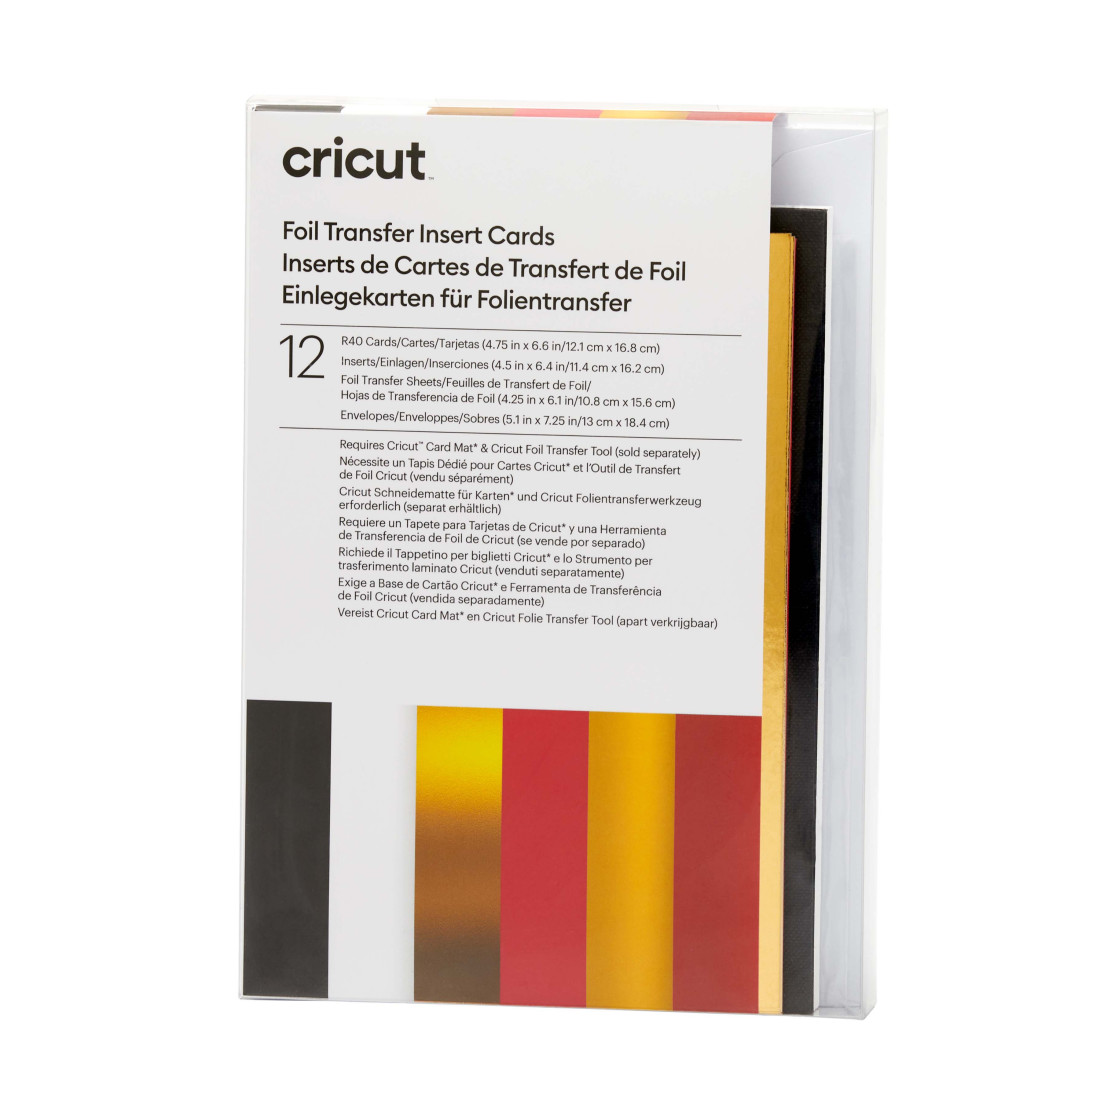 Cricut Foil Transfer Insert Cards and Pens!!!! Bunch of cricut